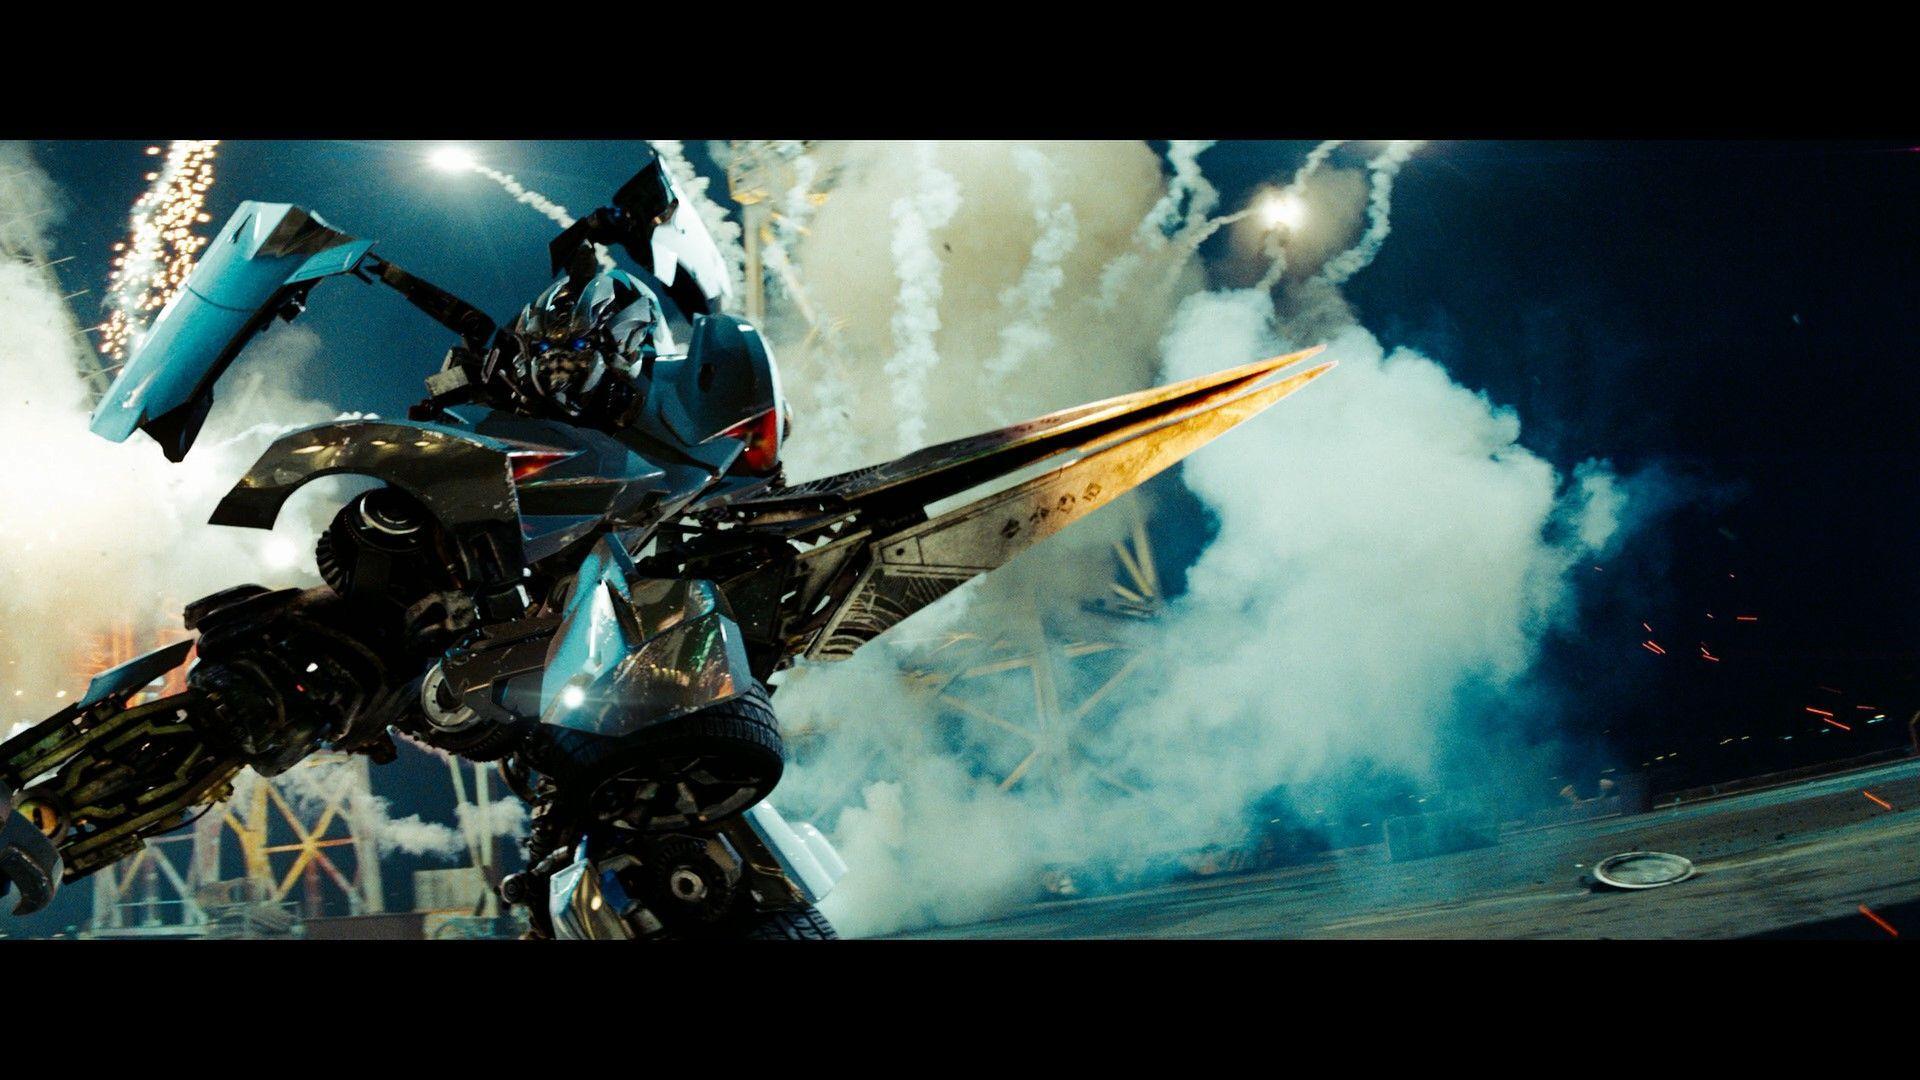 Sideswipe True High quality, Transformers Screenshots. High Quality